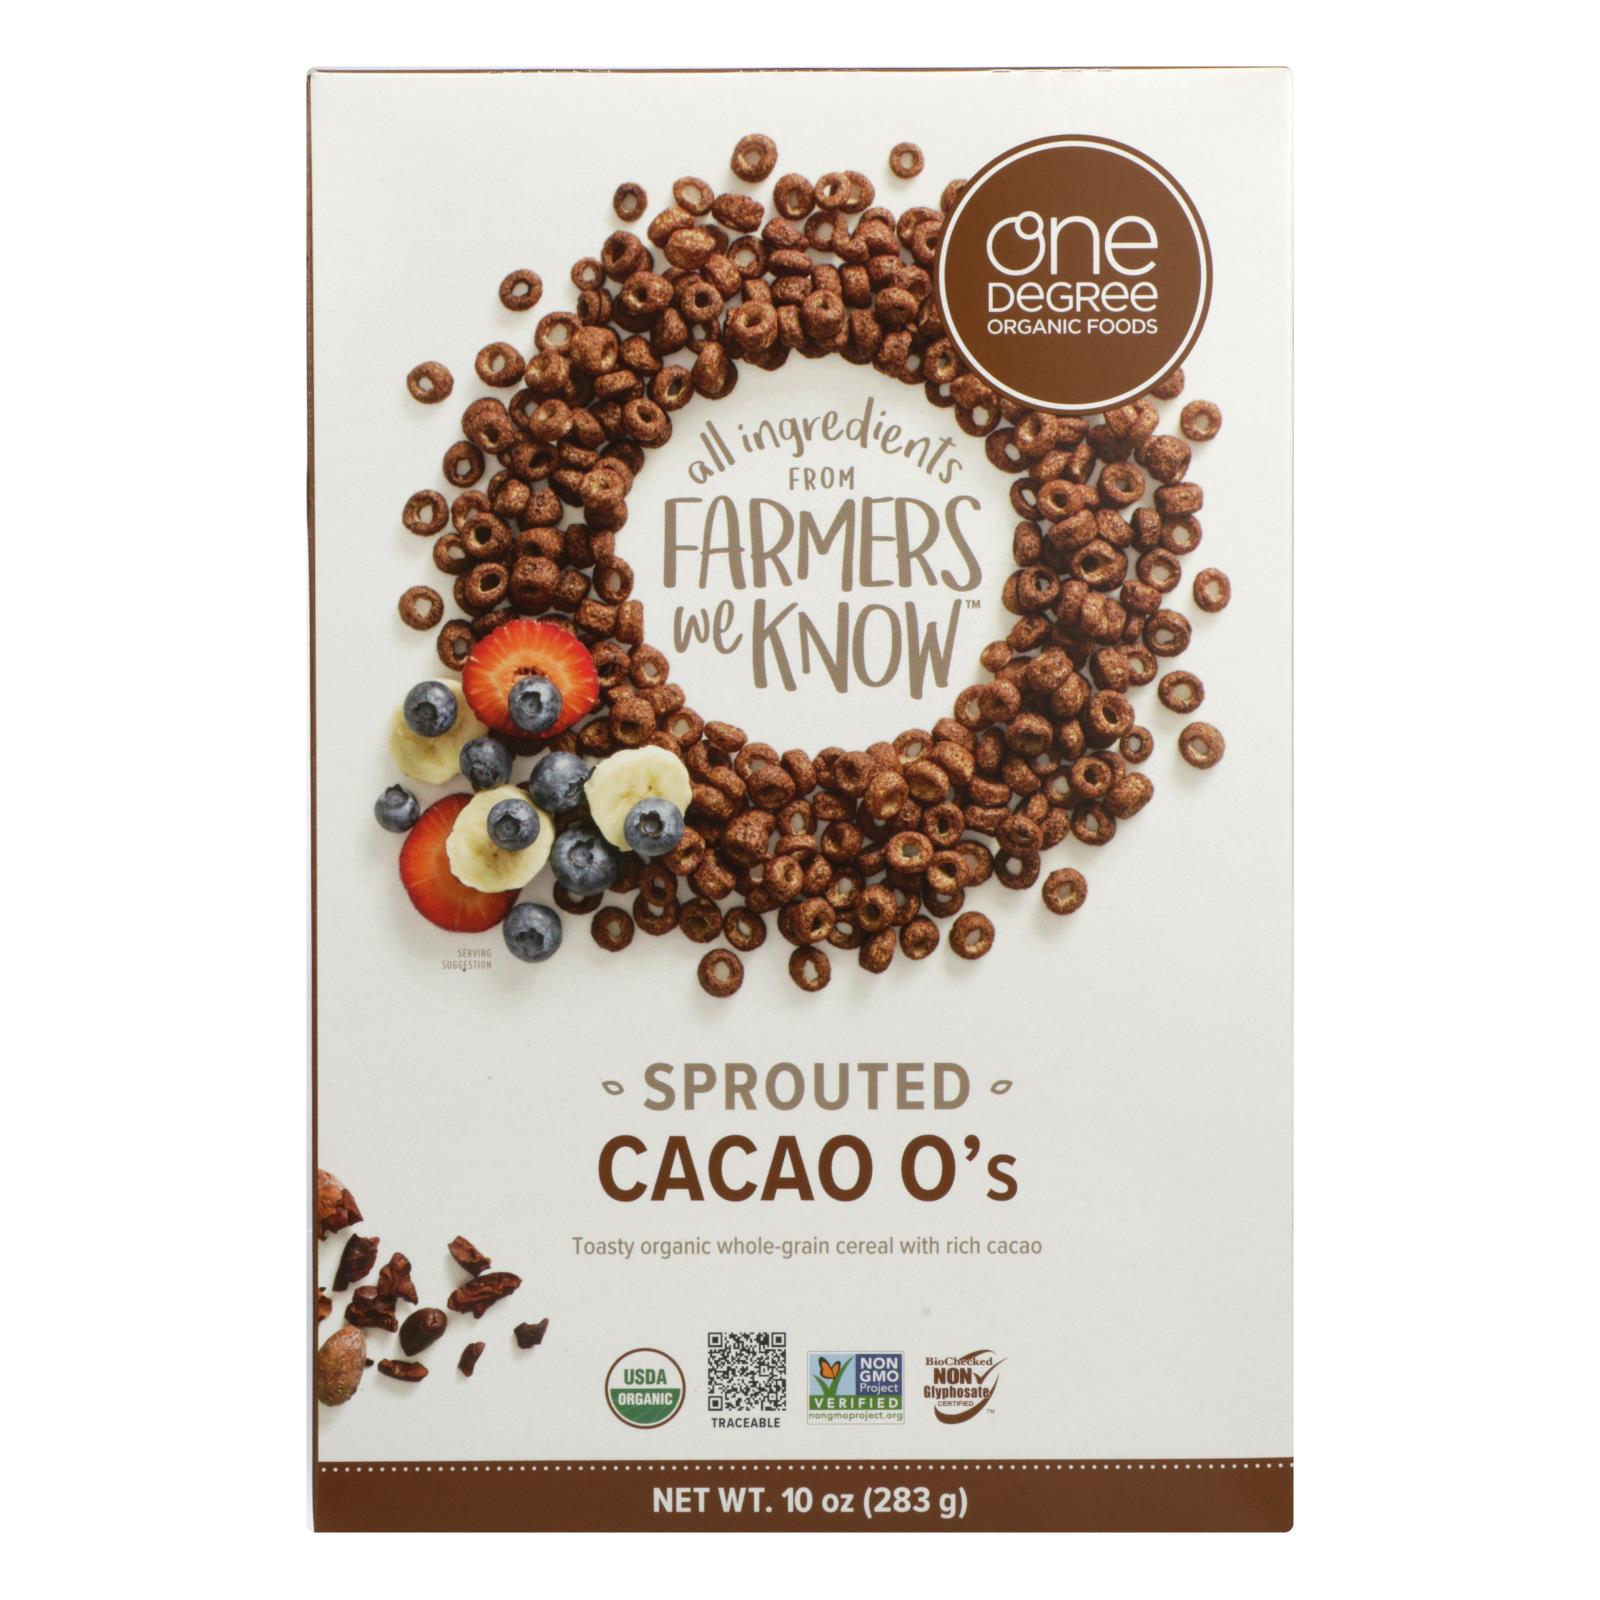 One Degree Organic Foods - Crl Sprtd Cacao O's - 6개 묶음상품 - 10 OZ